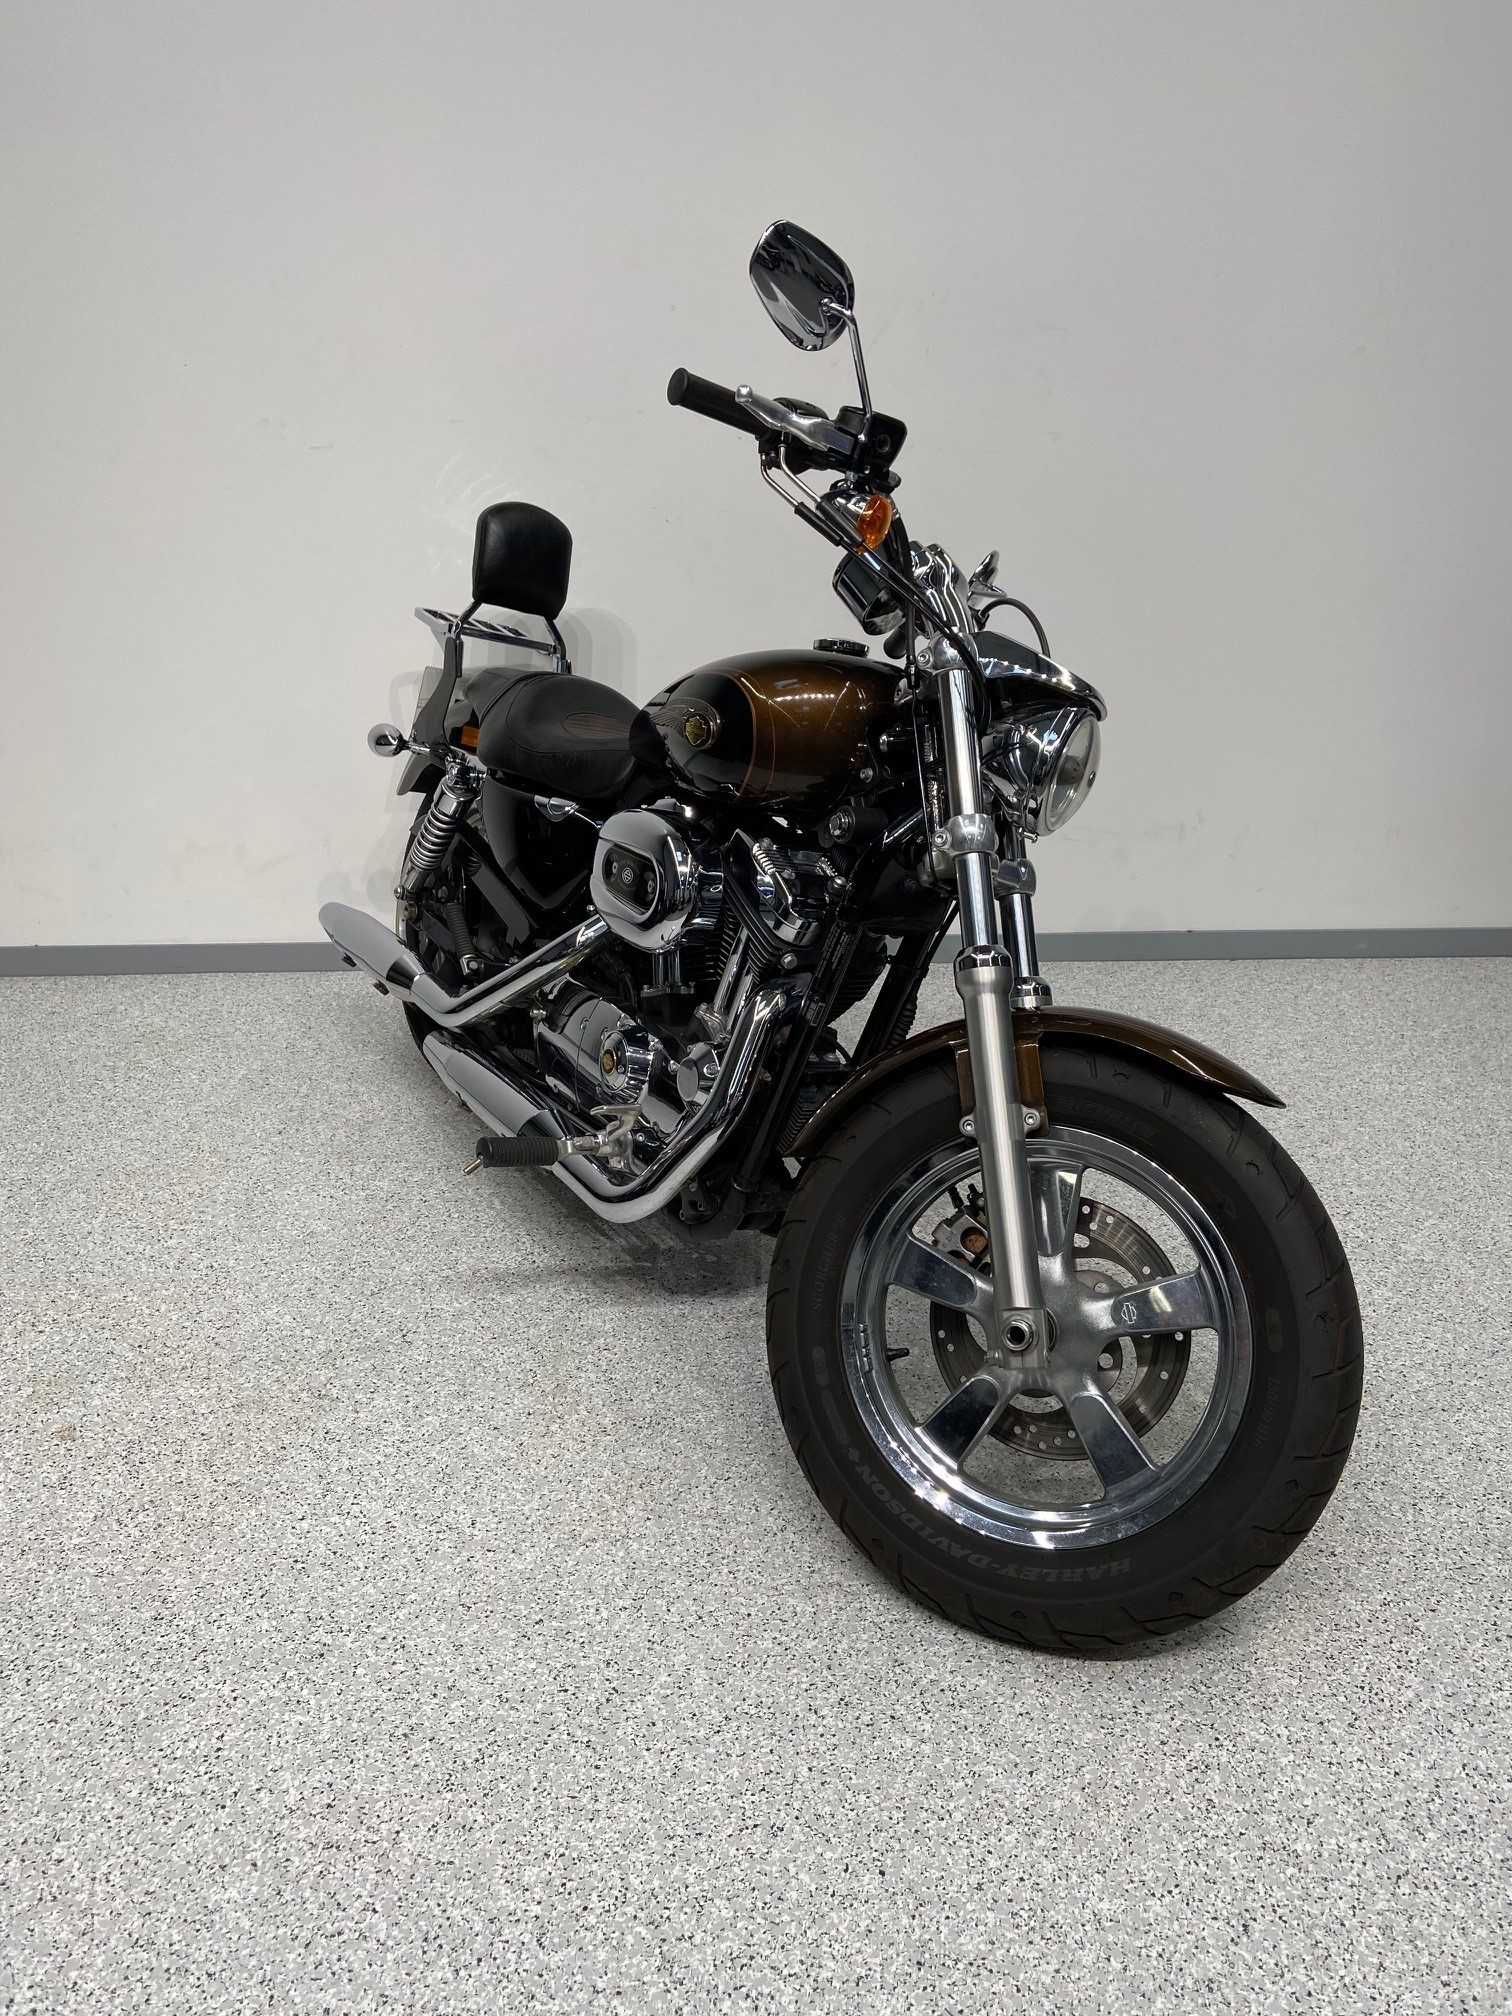 Harley-Davidson XL 1200 2013 HD vue 3/4 droite